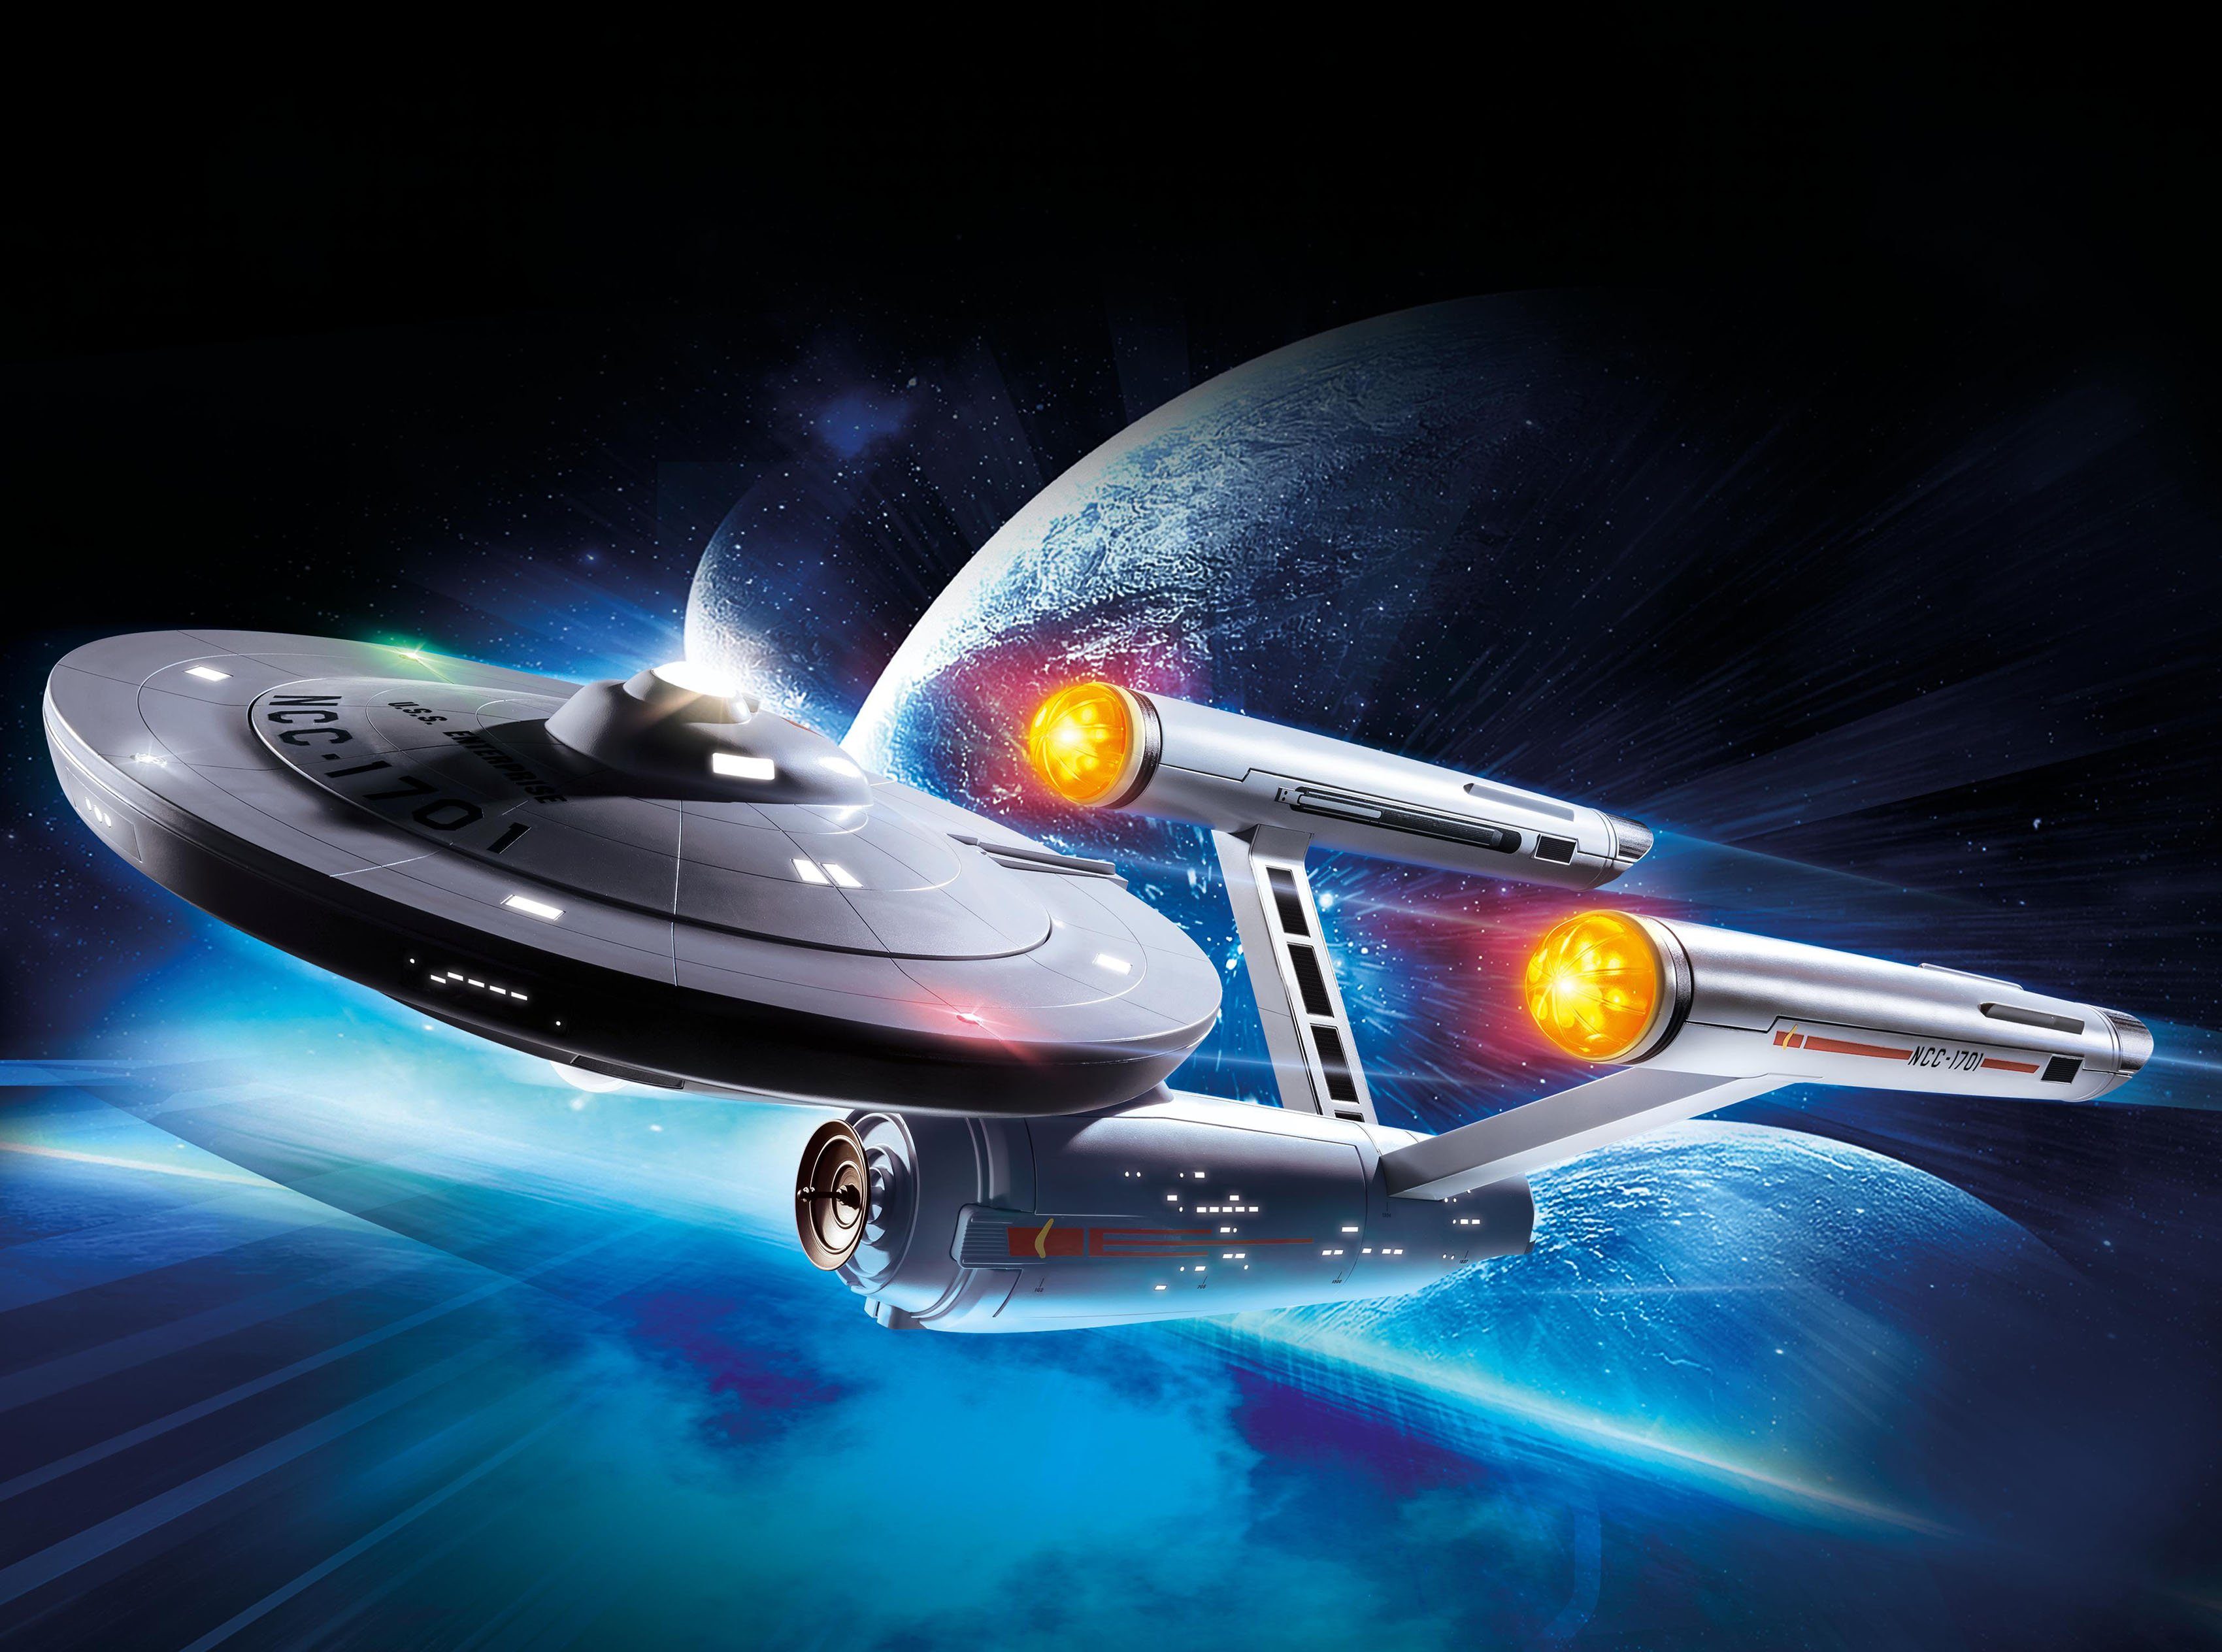 Europe Konstruktions-Spielset (150 (70548), Trek Playmobil® - Enterprise in U.S.S. NCC-1701 Made Star St),